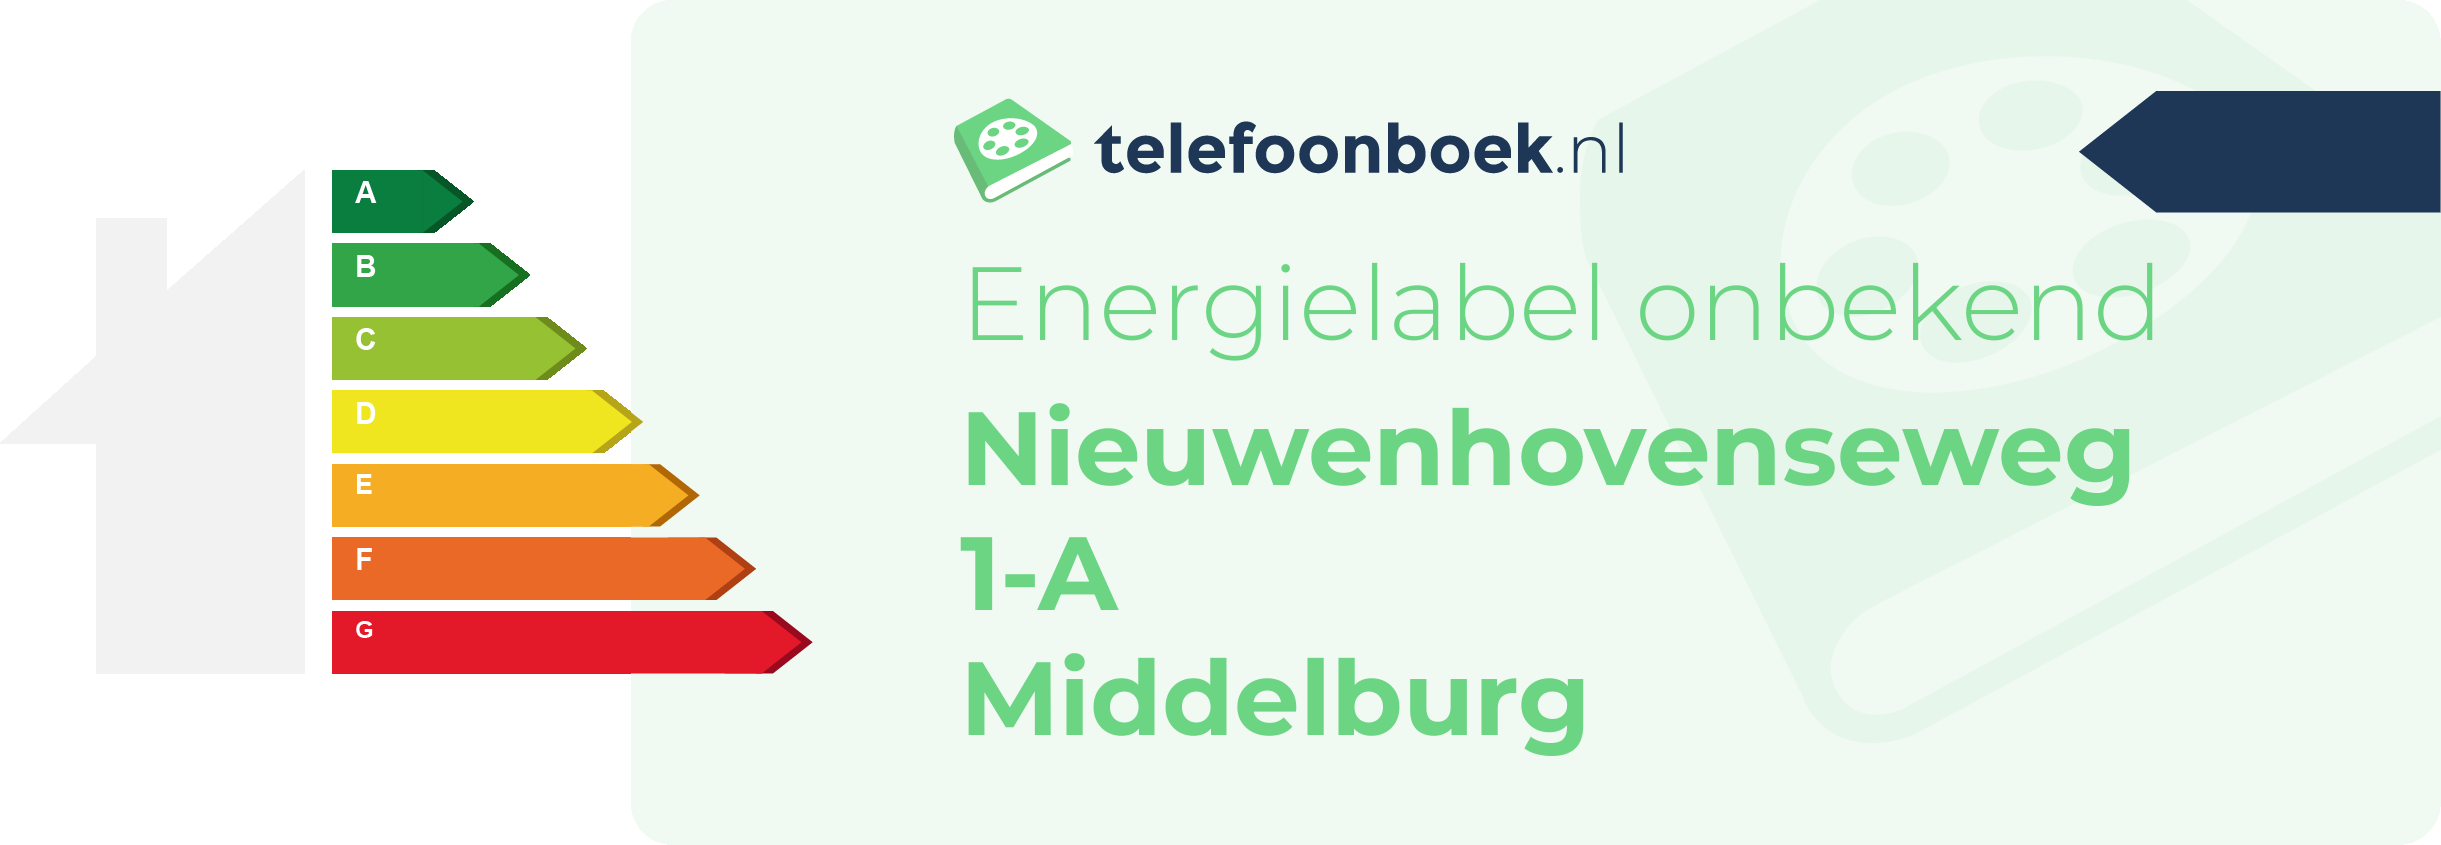 Energielabel Nieuwenhovenseweg 1-A Middelburg